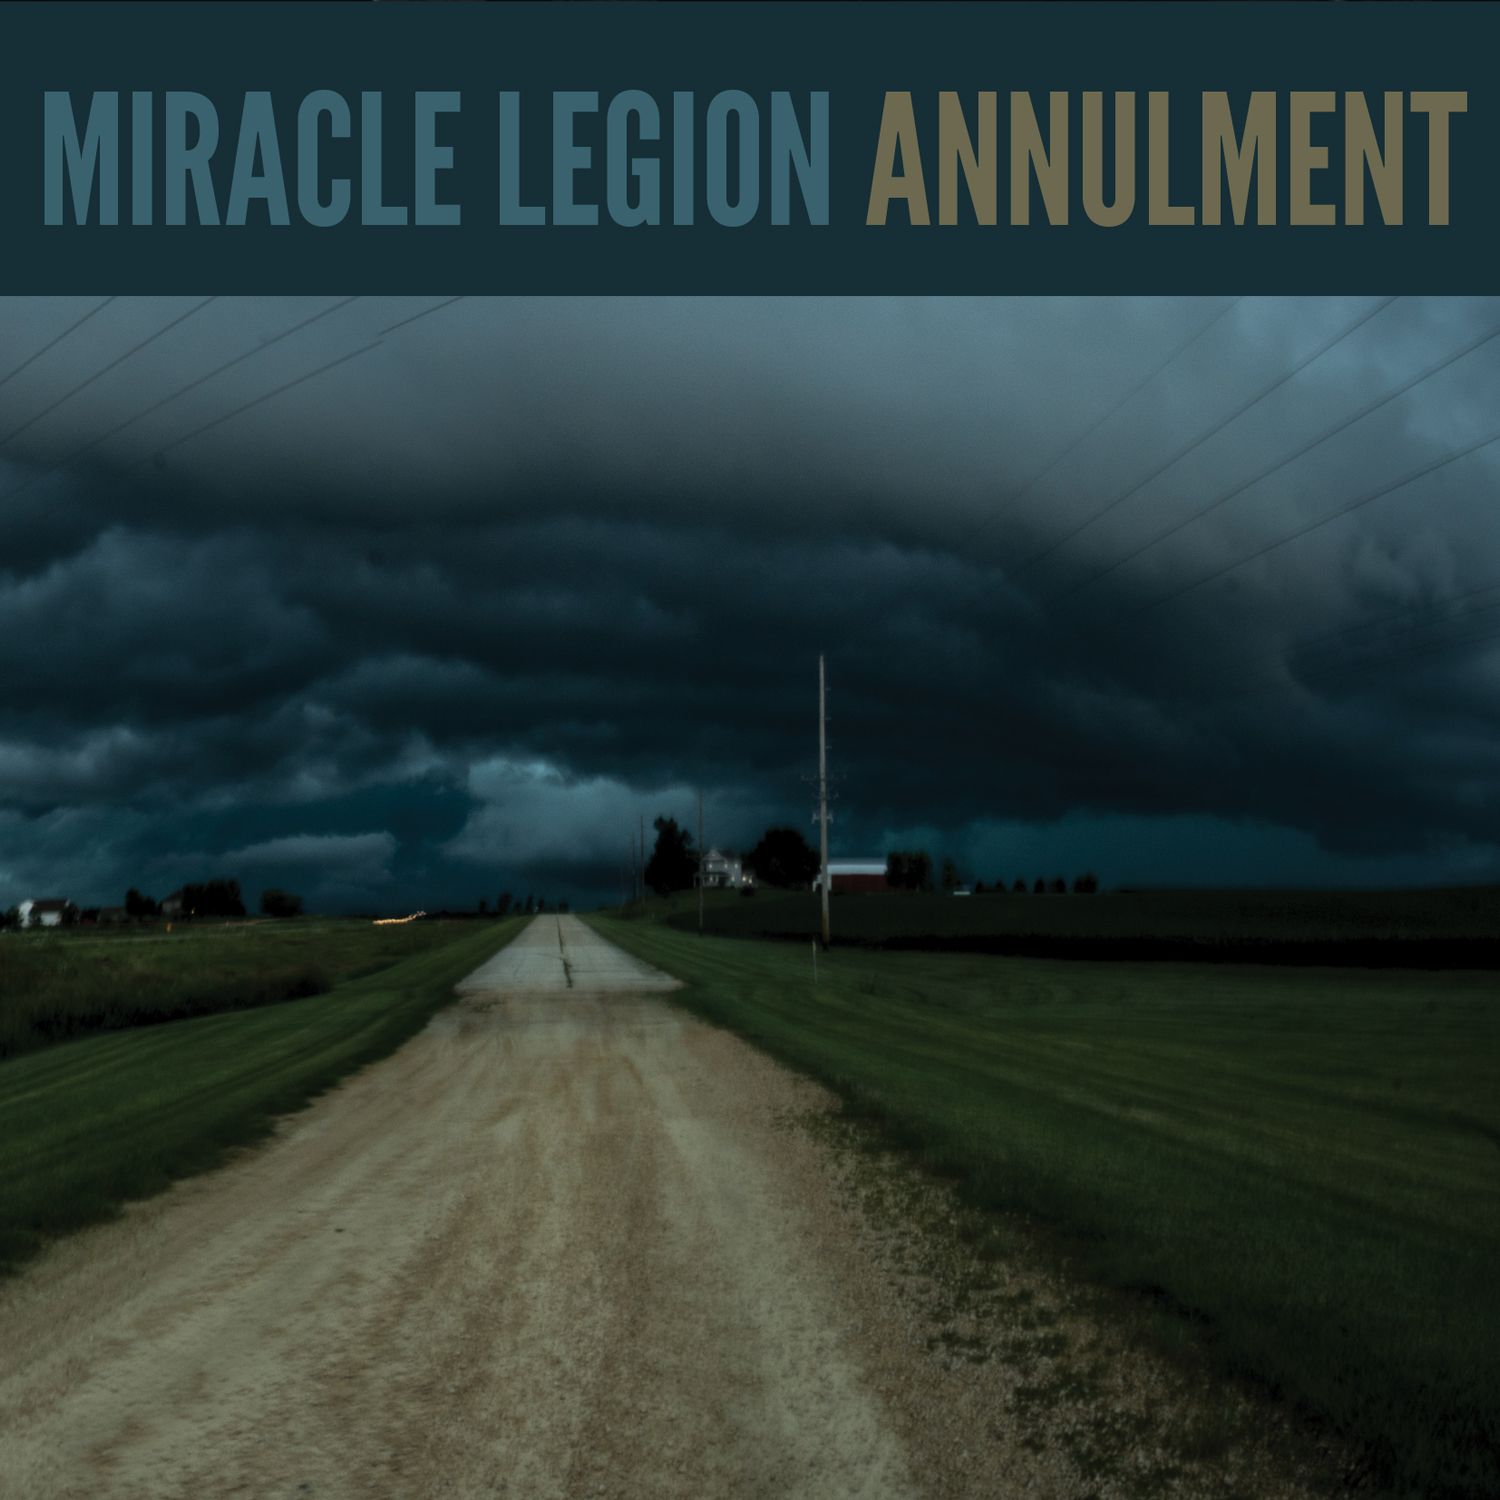 ml annulment1500 Mark Mulcahy announces new solo album, live album, and final Miracle Legion tour dates